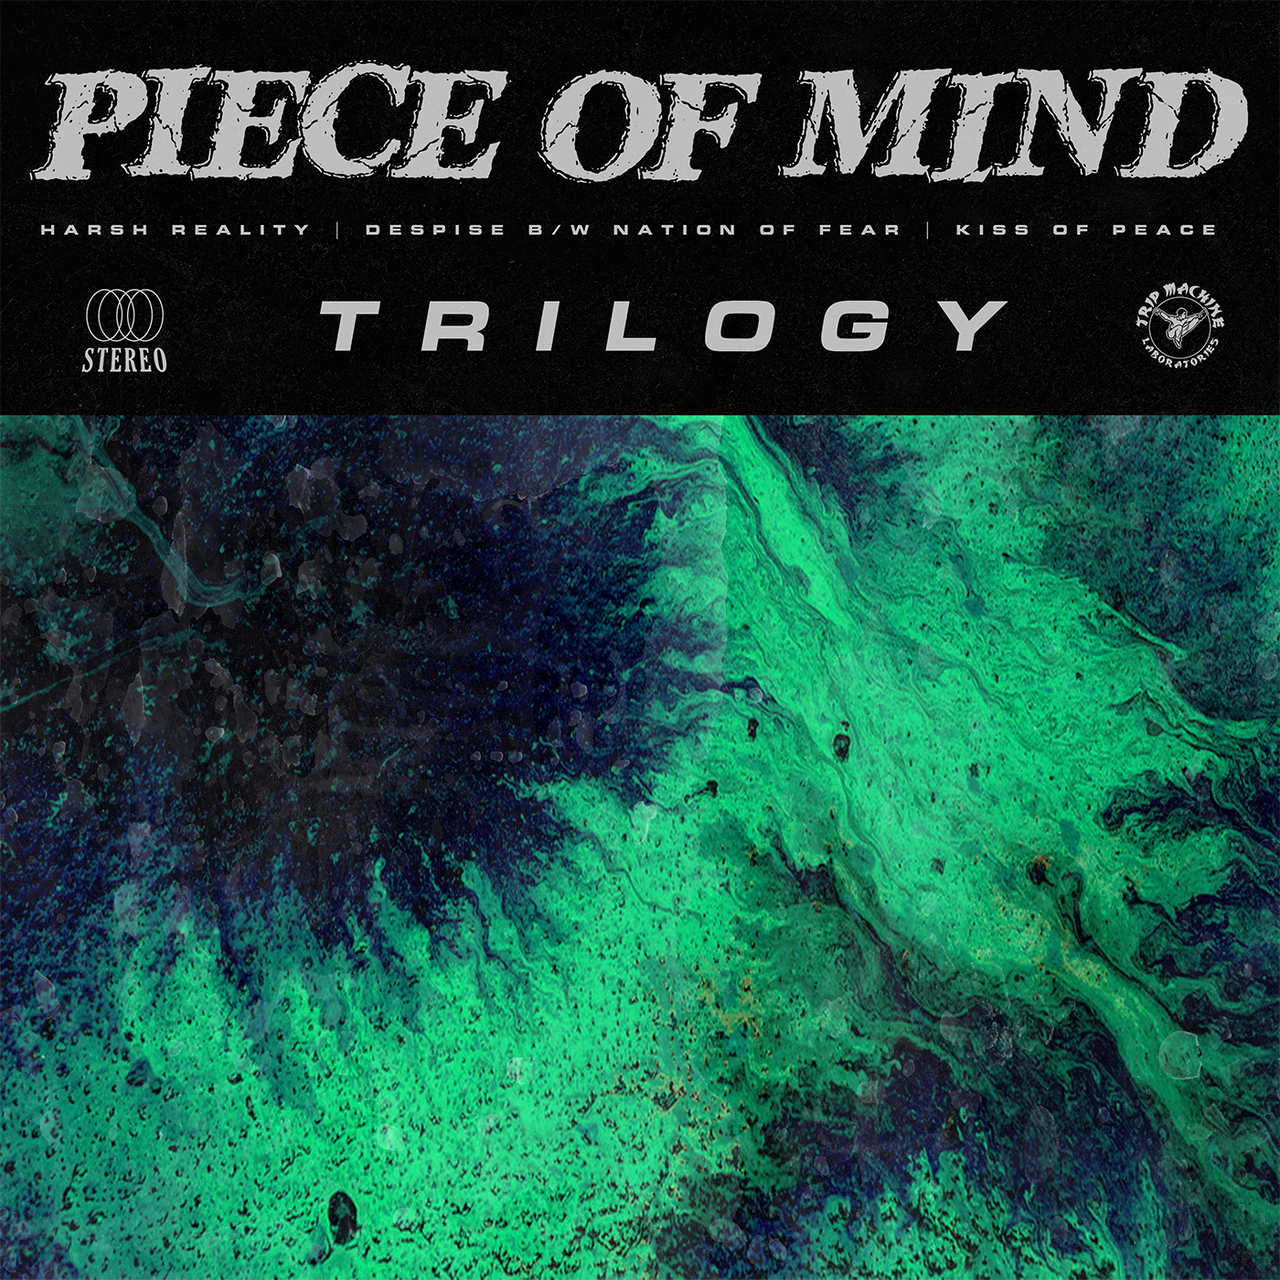 Piece of Mind "Trilogy" 12" Vinyl